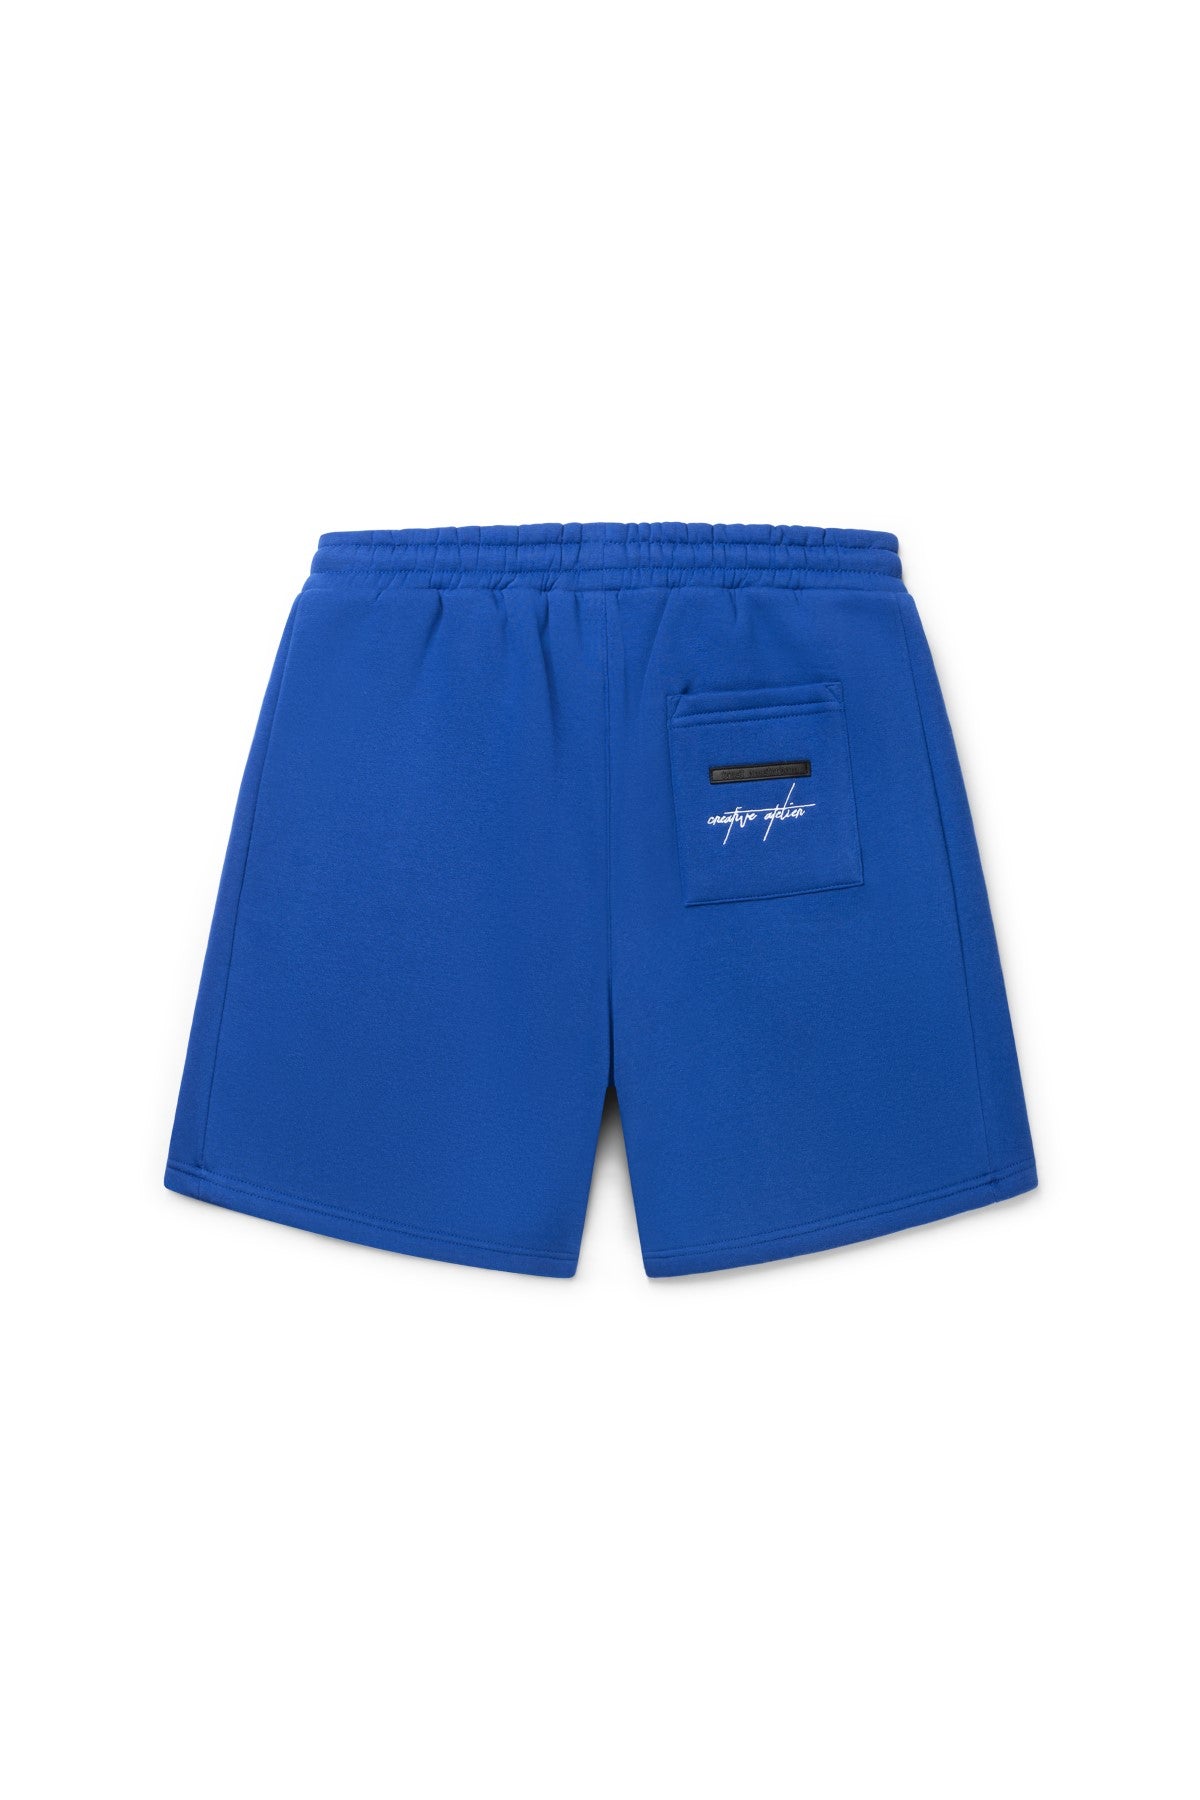 Seasonless Shorts - Cobalt Blue